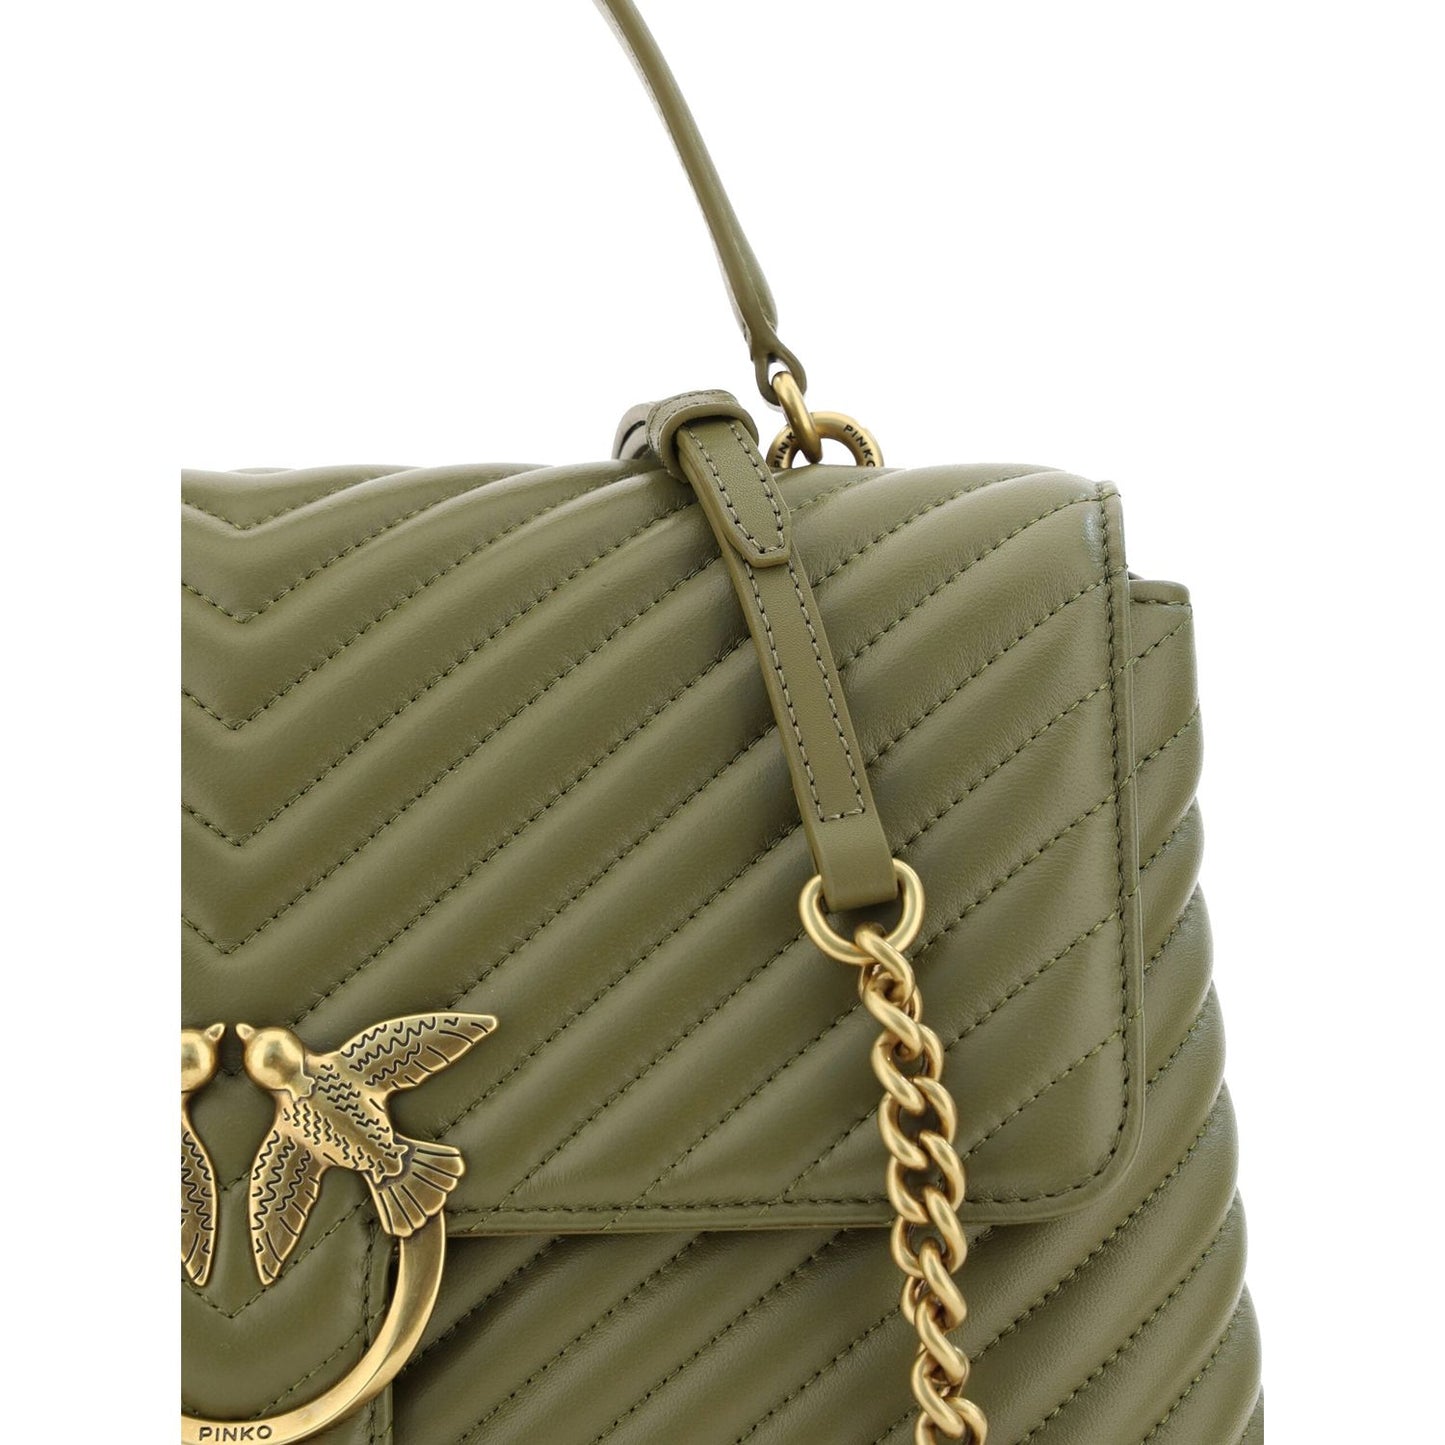 PINKO Emerald Elegance Calf Leather Handbag green-calf-leather-love-lady-handbag 5034CF03-43B4-4FCD-9DF4-E106C127C63B-scaled-4aa95d66-4f1.jpg